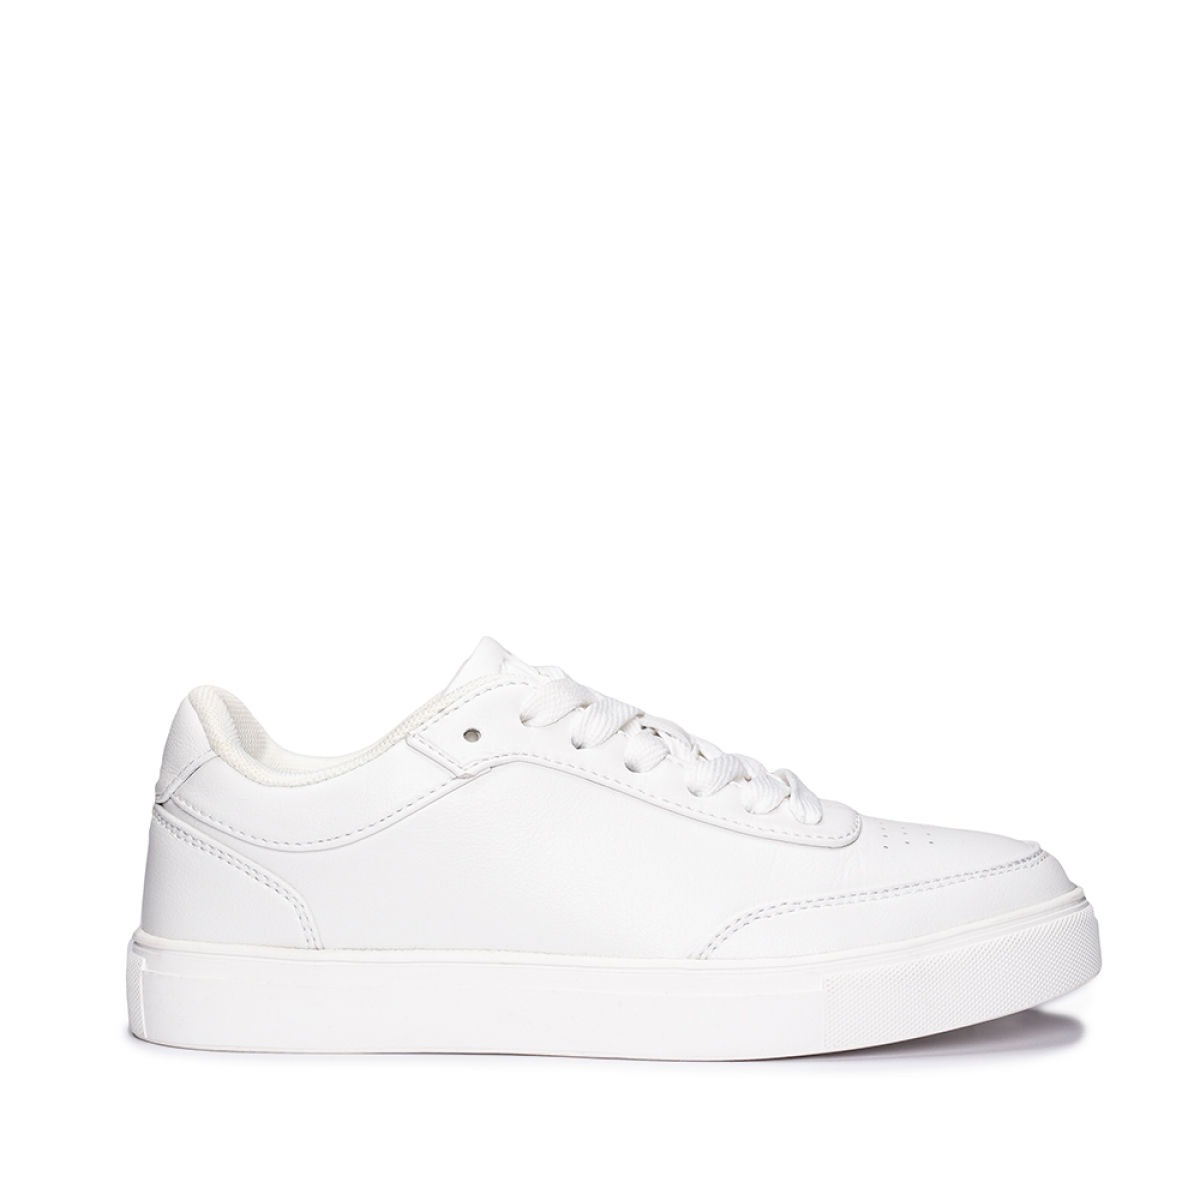 Vegan Sneakers| Shopping | White vegan lace-up - Pole_White